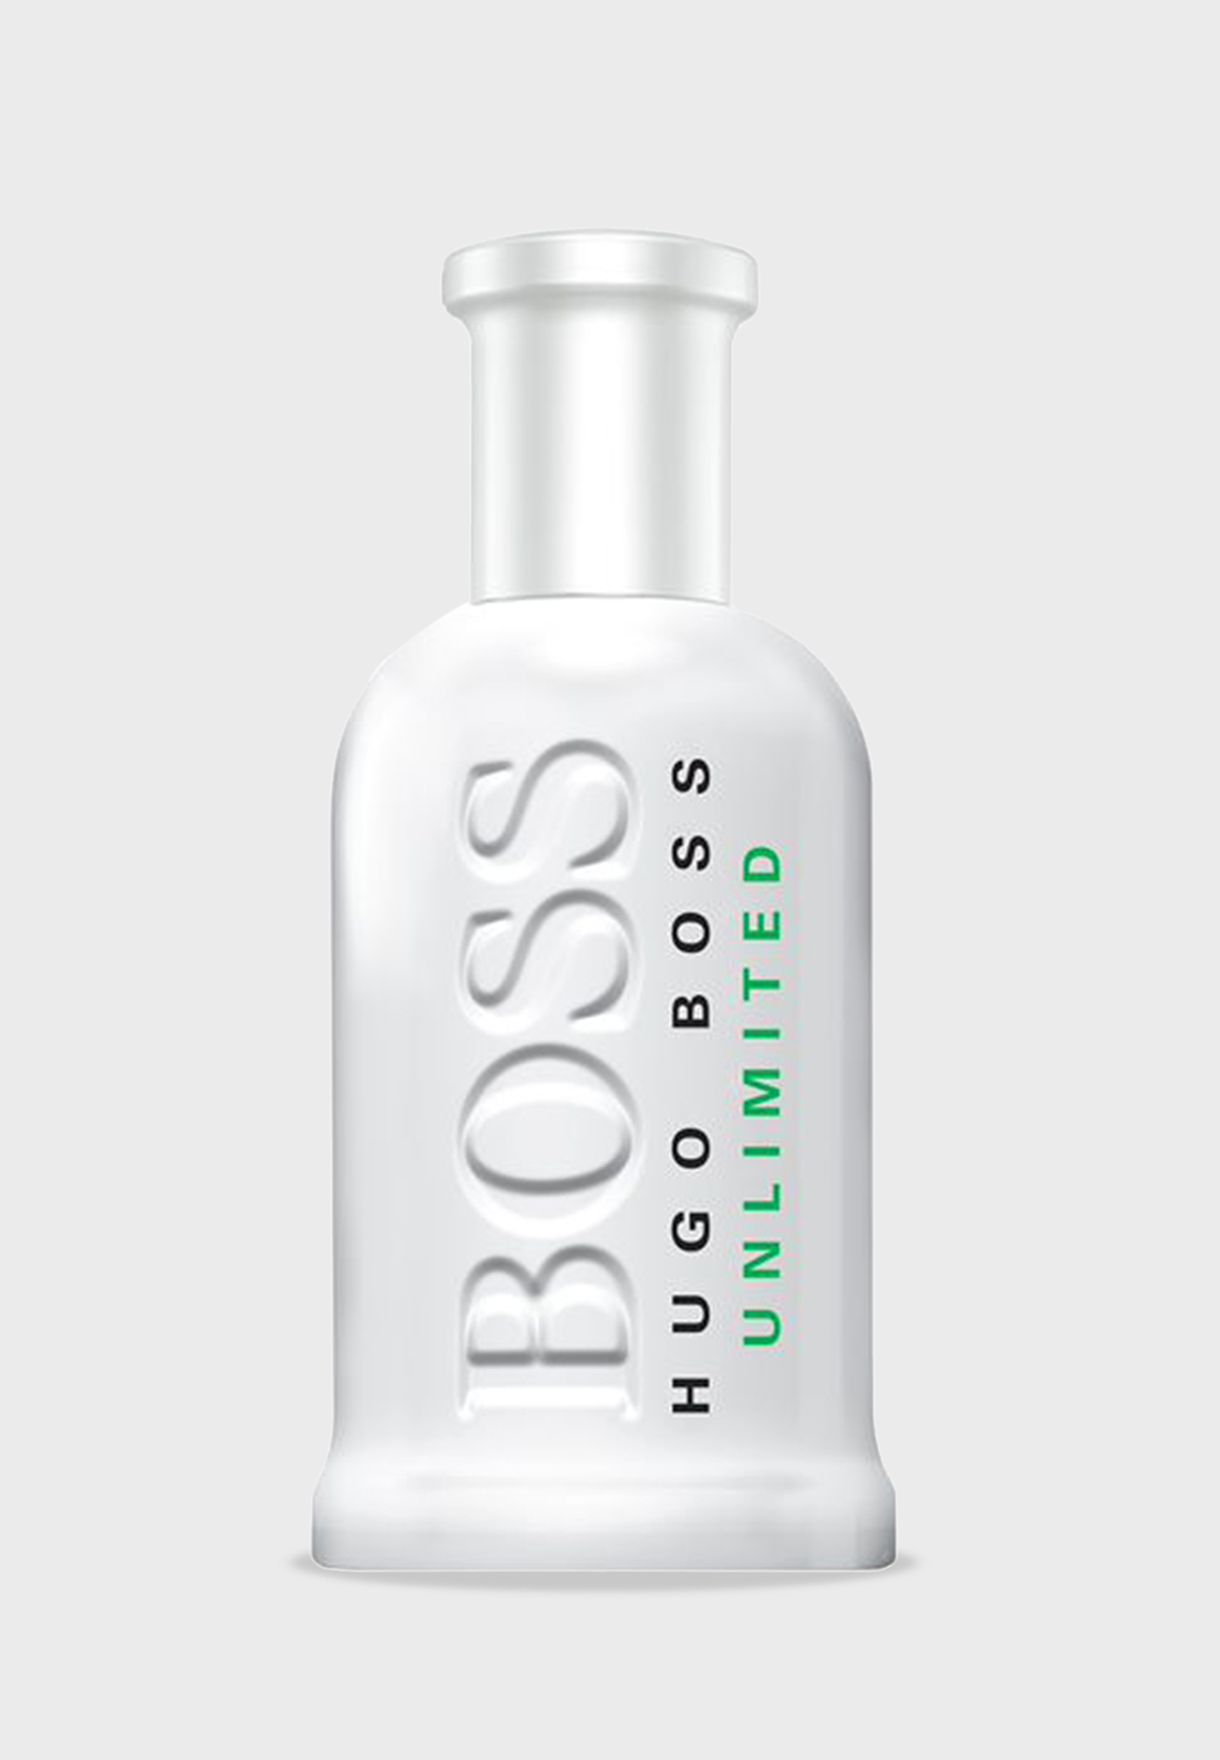 hugo boss clear bottle